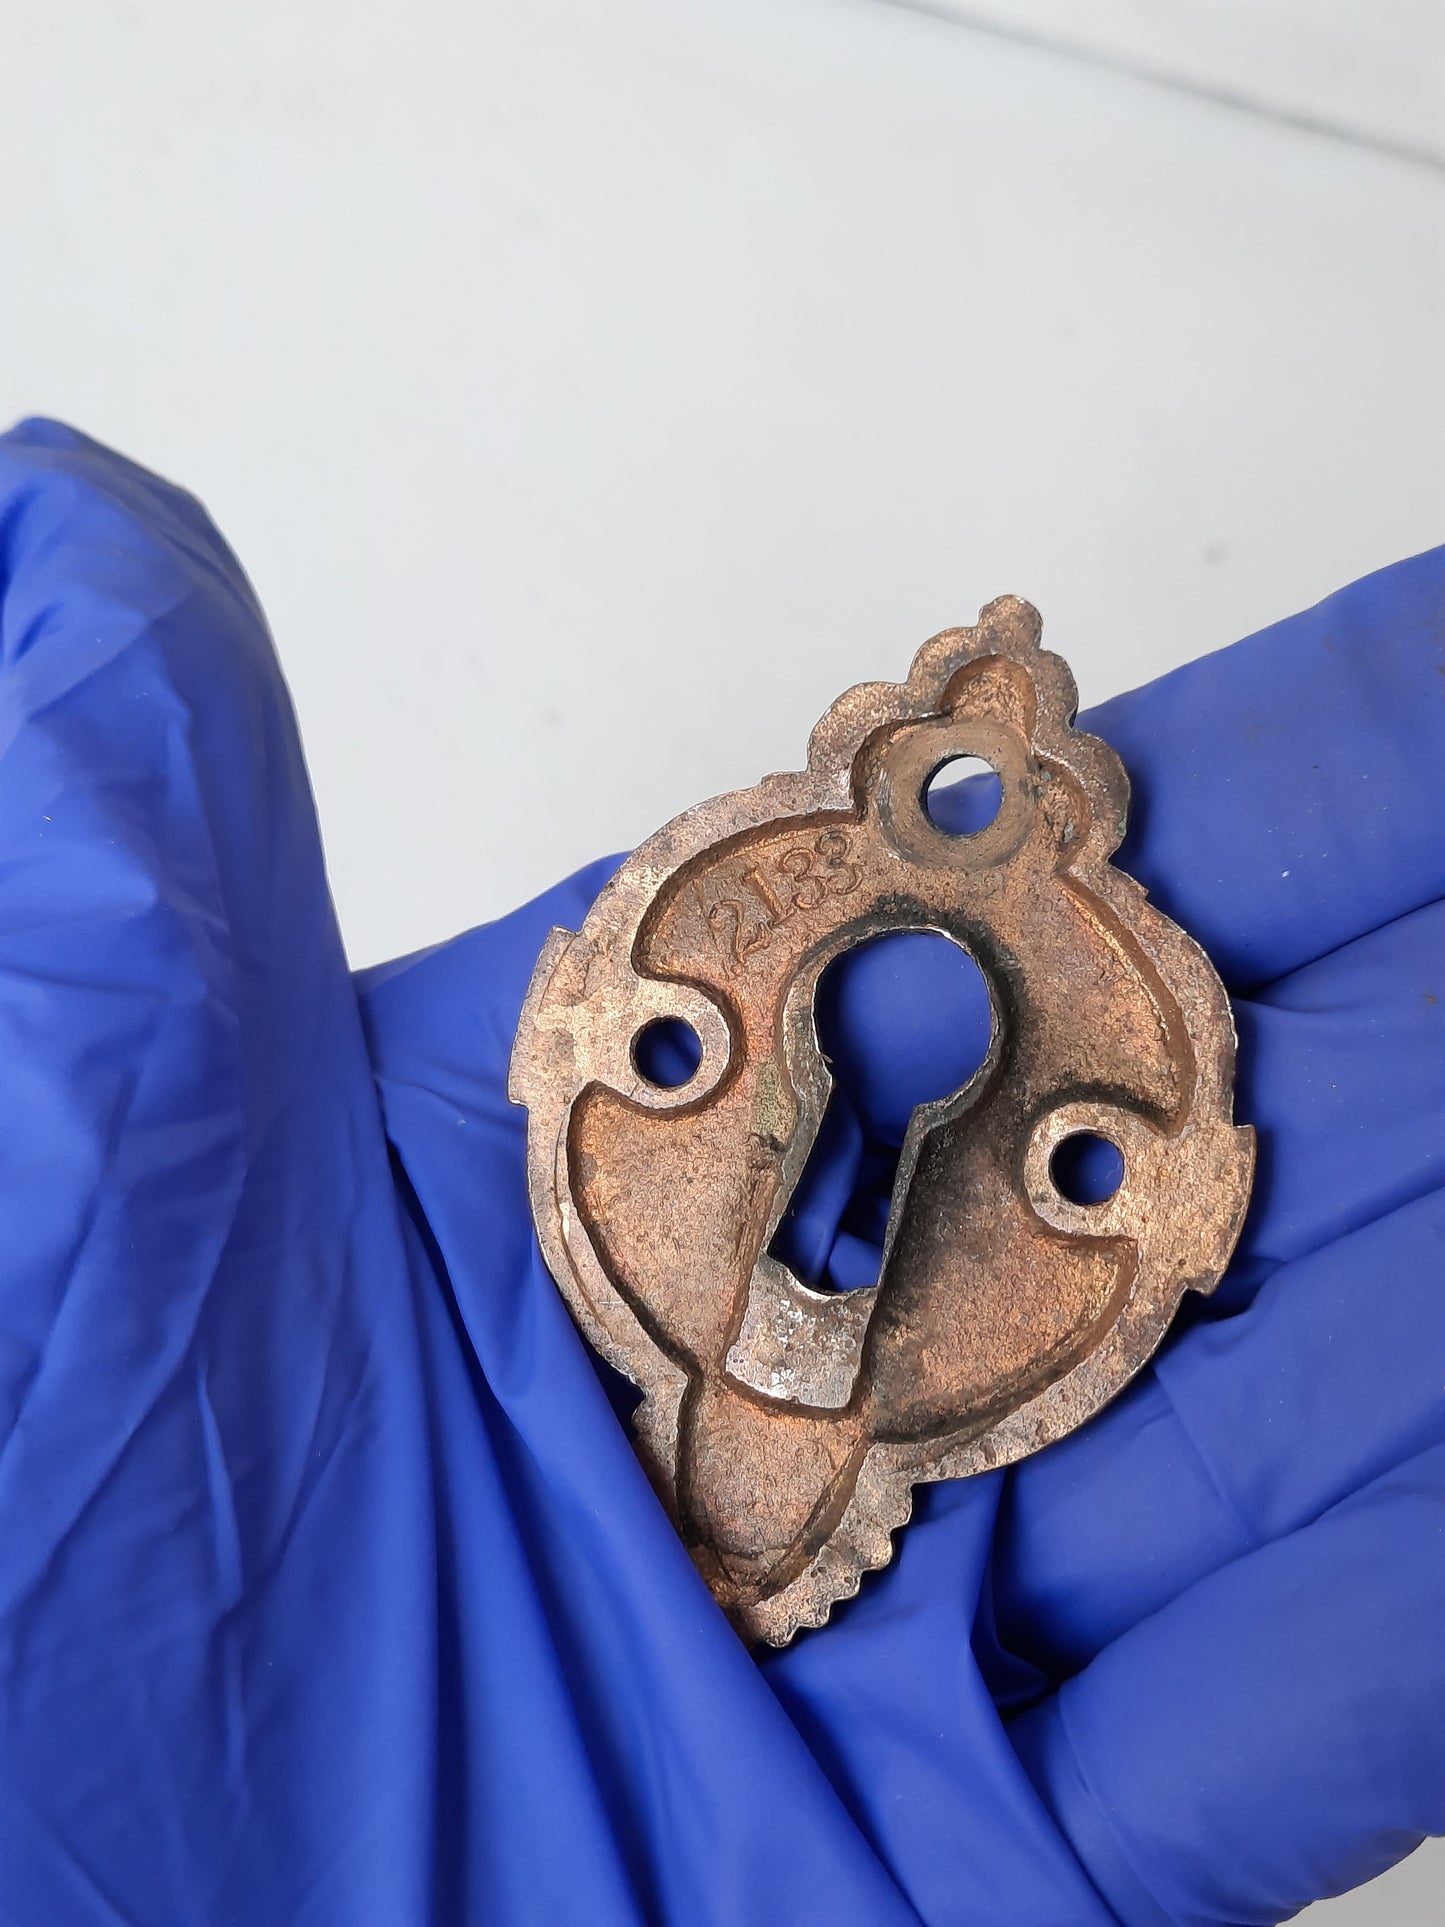 Unusually Shaped Antique Key Hole Cover, Bronze Eastlake Keyhole Plate 022709